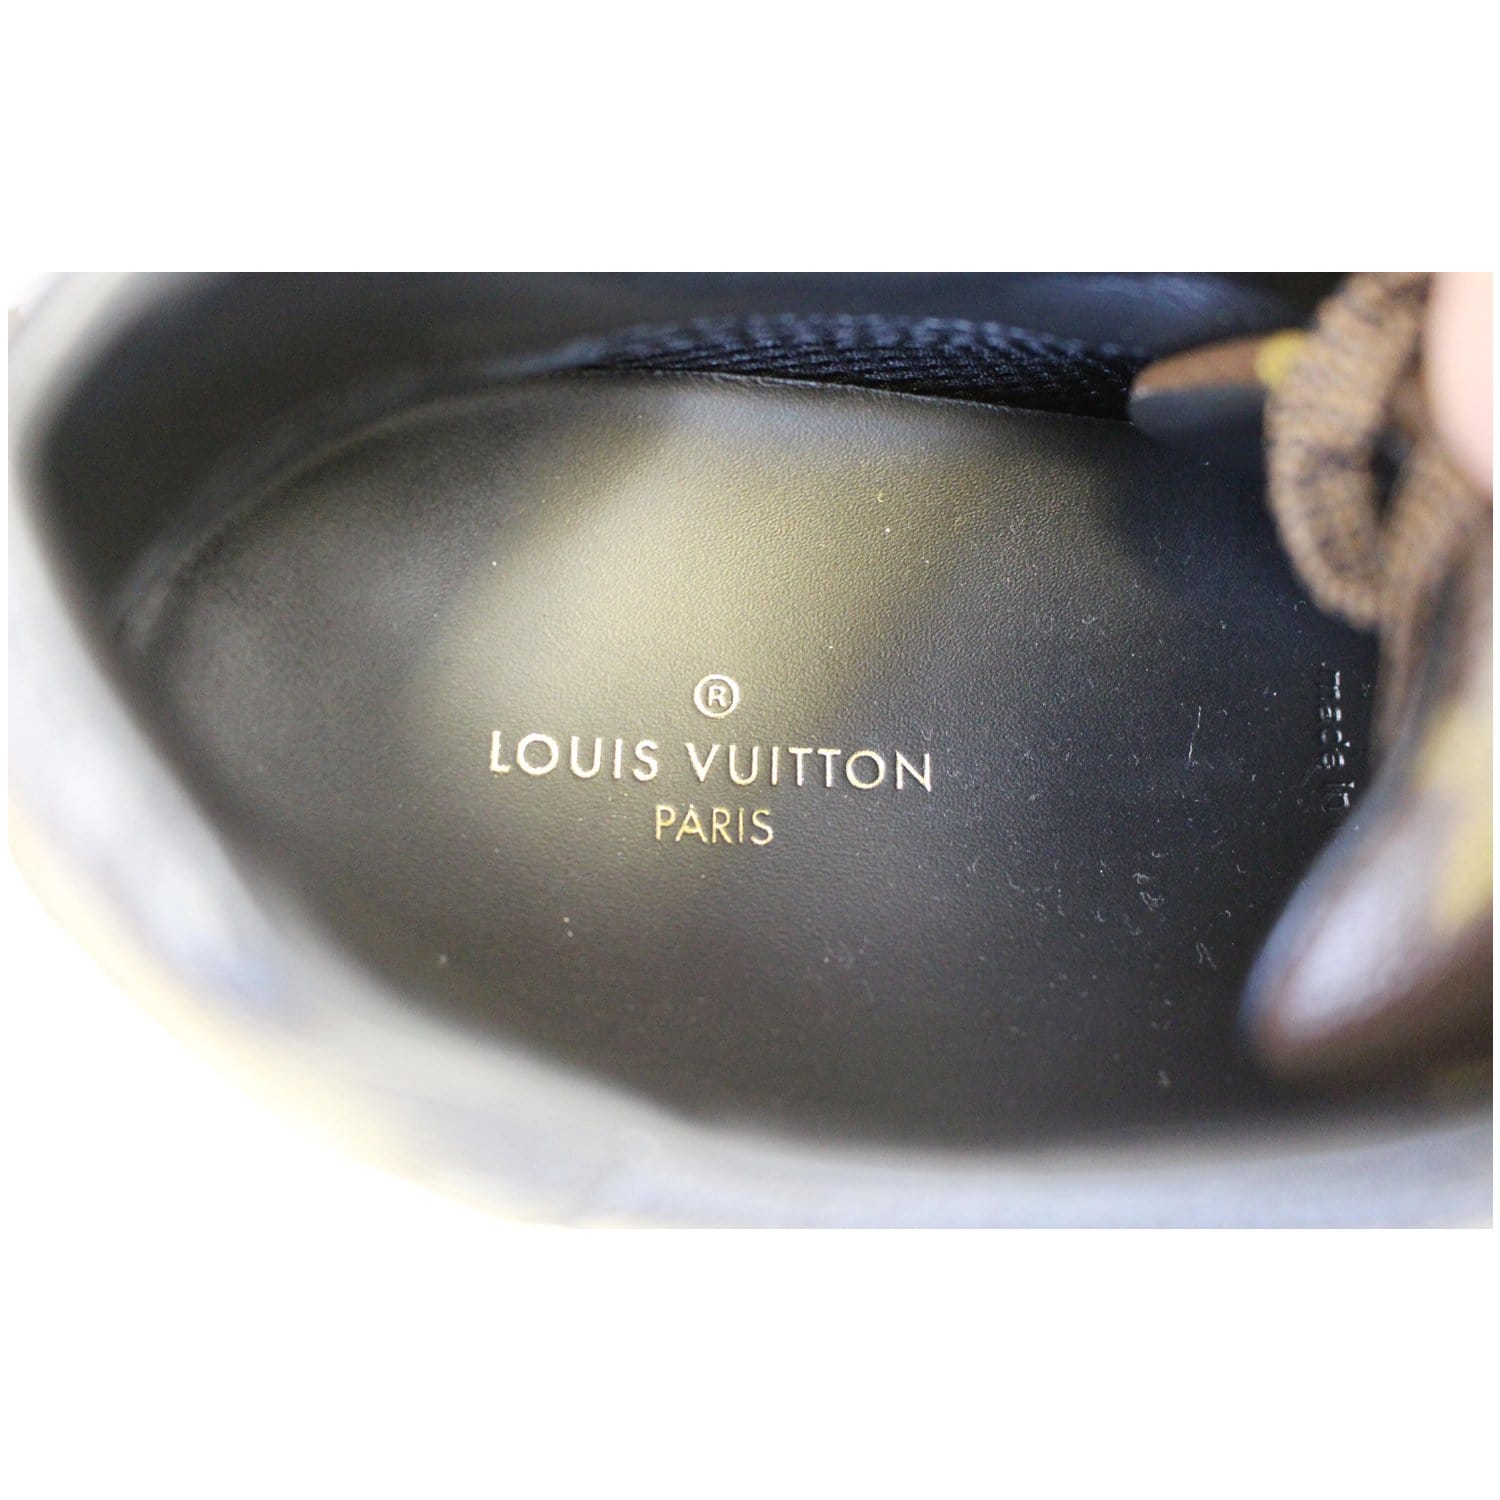 Louis Vuitton Run Away Monogram Tri Color Trainer Sneakers Size LV8 US9